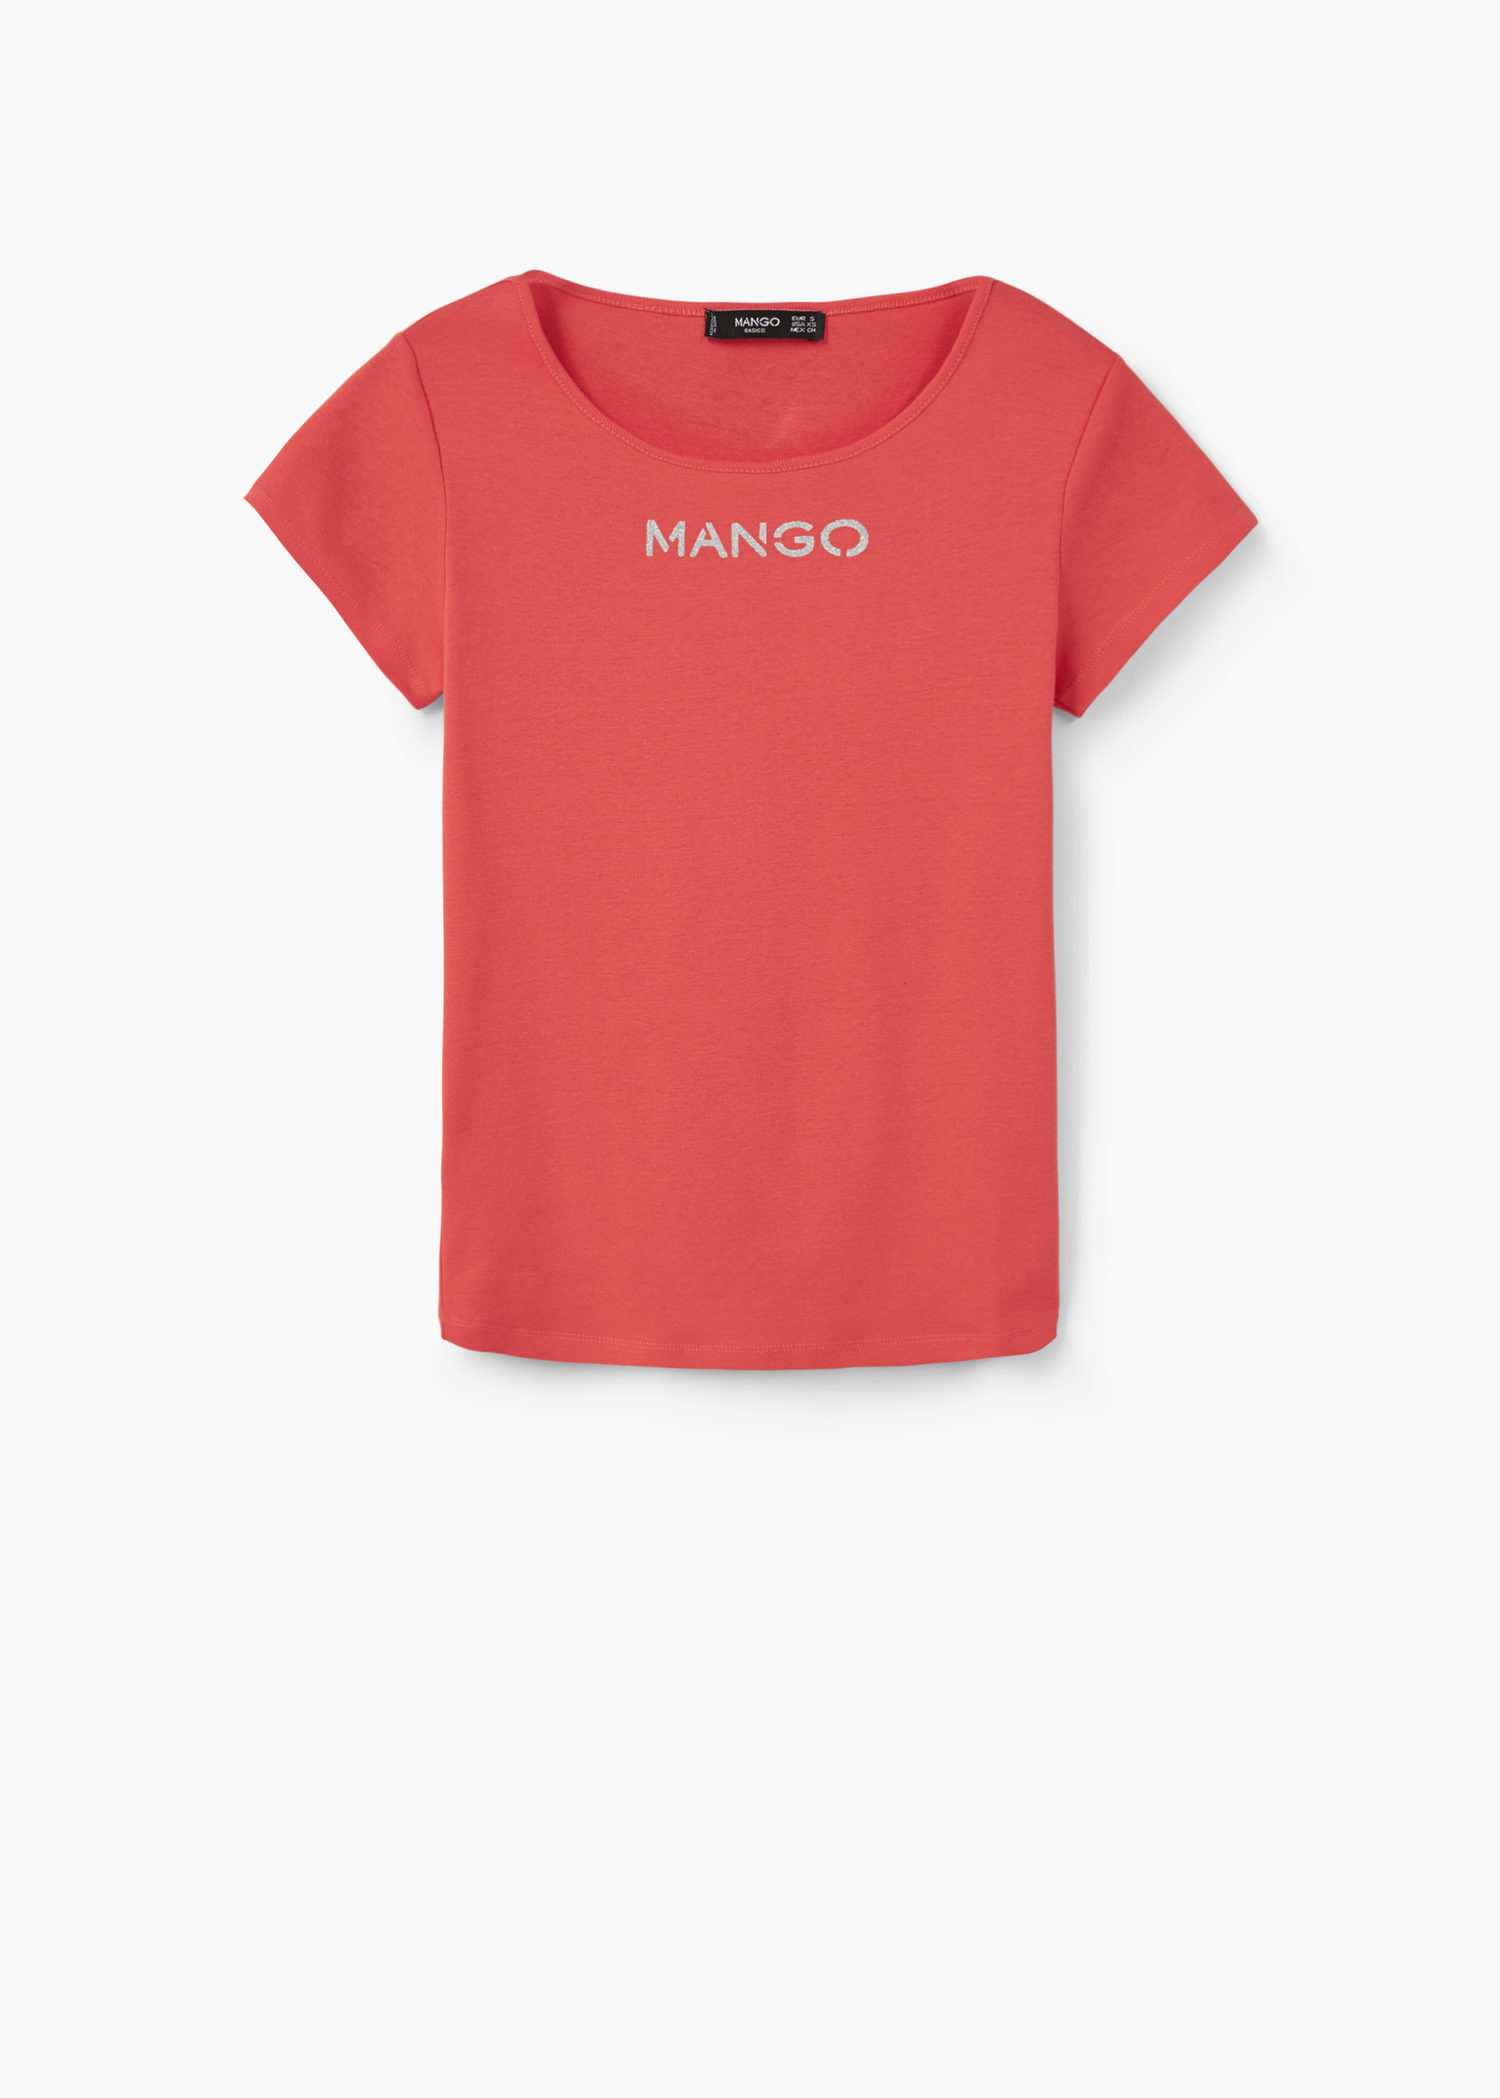 red mango t shirt